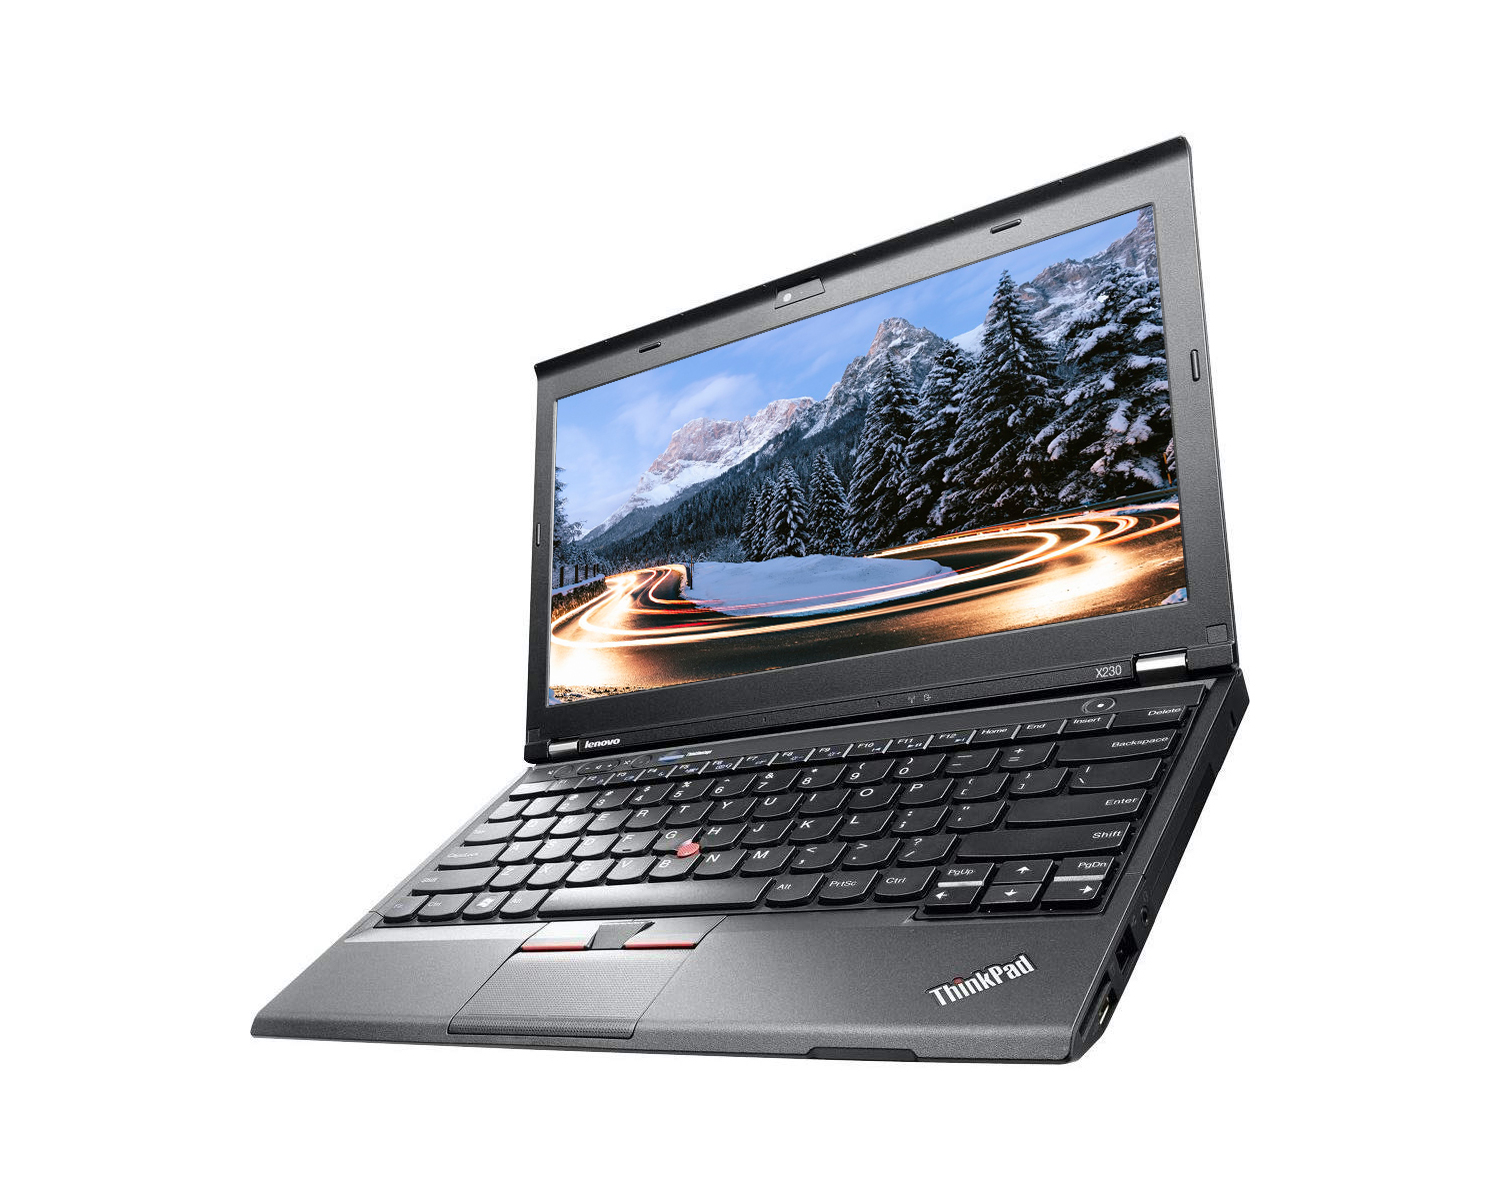 Lenovo Thinkpad X230 12″ laptop Intel Core i5-3320M 2.60GHz 4GB Ram 320GB HDD Webcam Windows 10 Home (Upgrades Available)